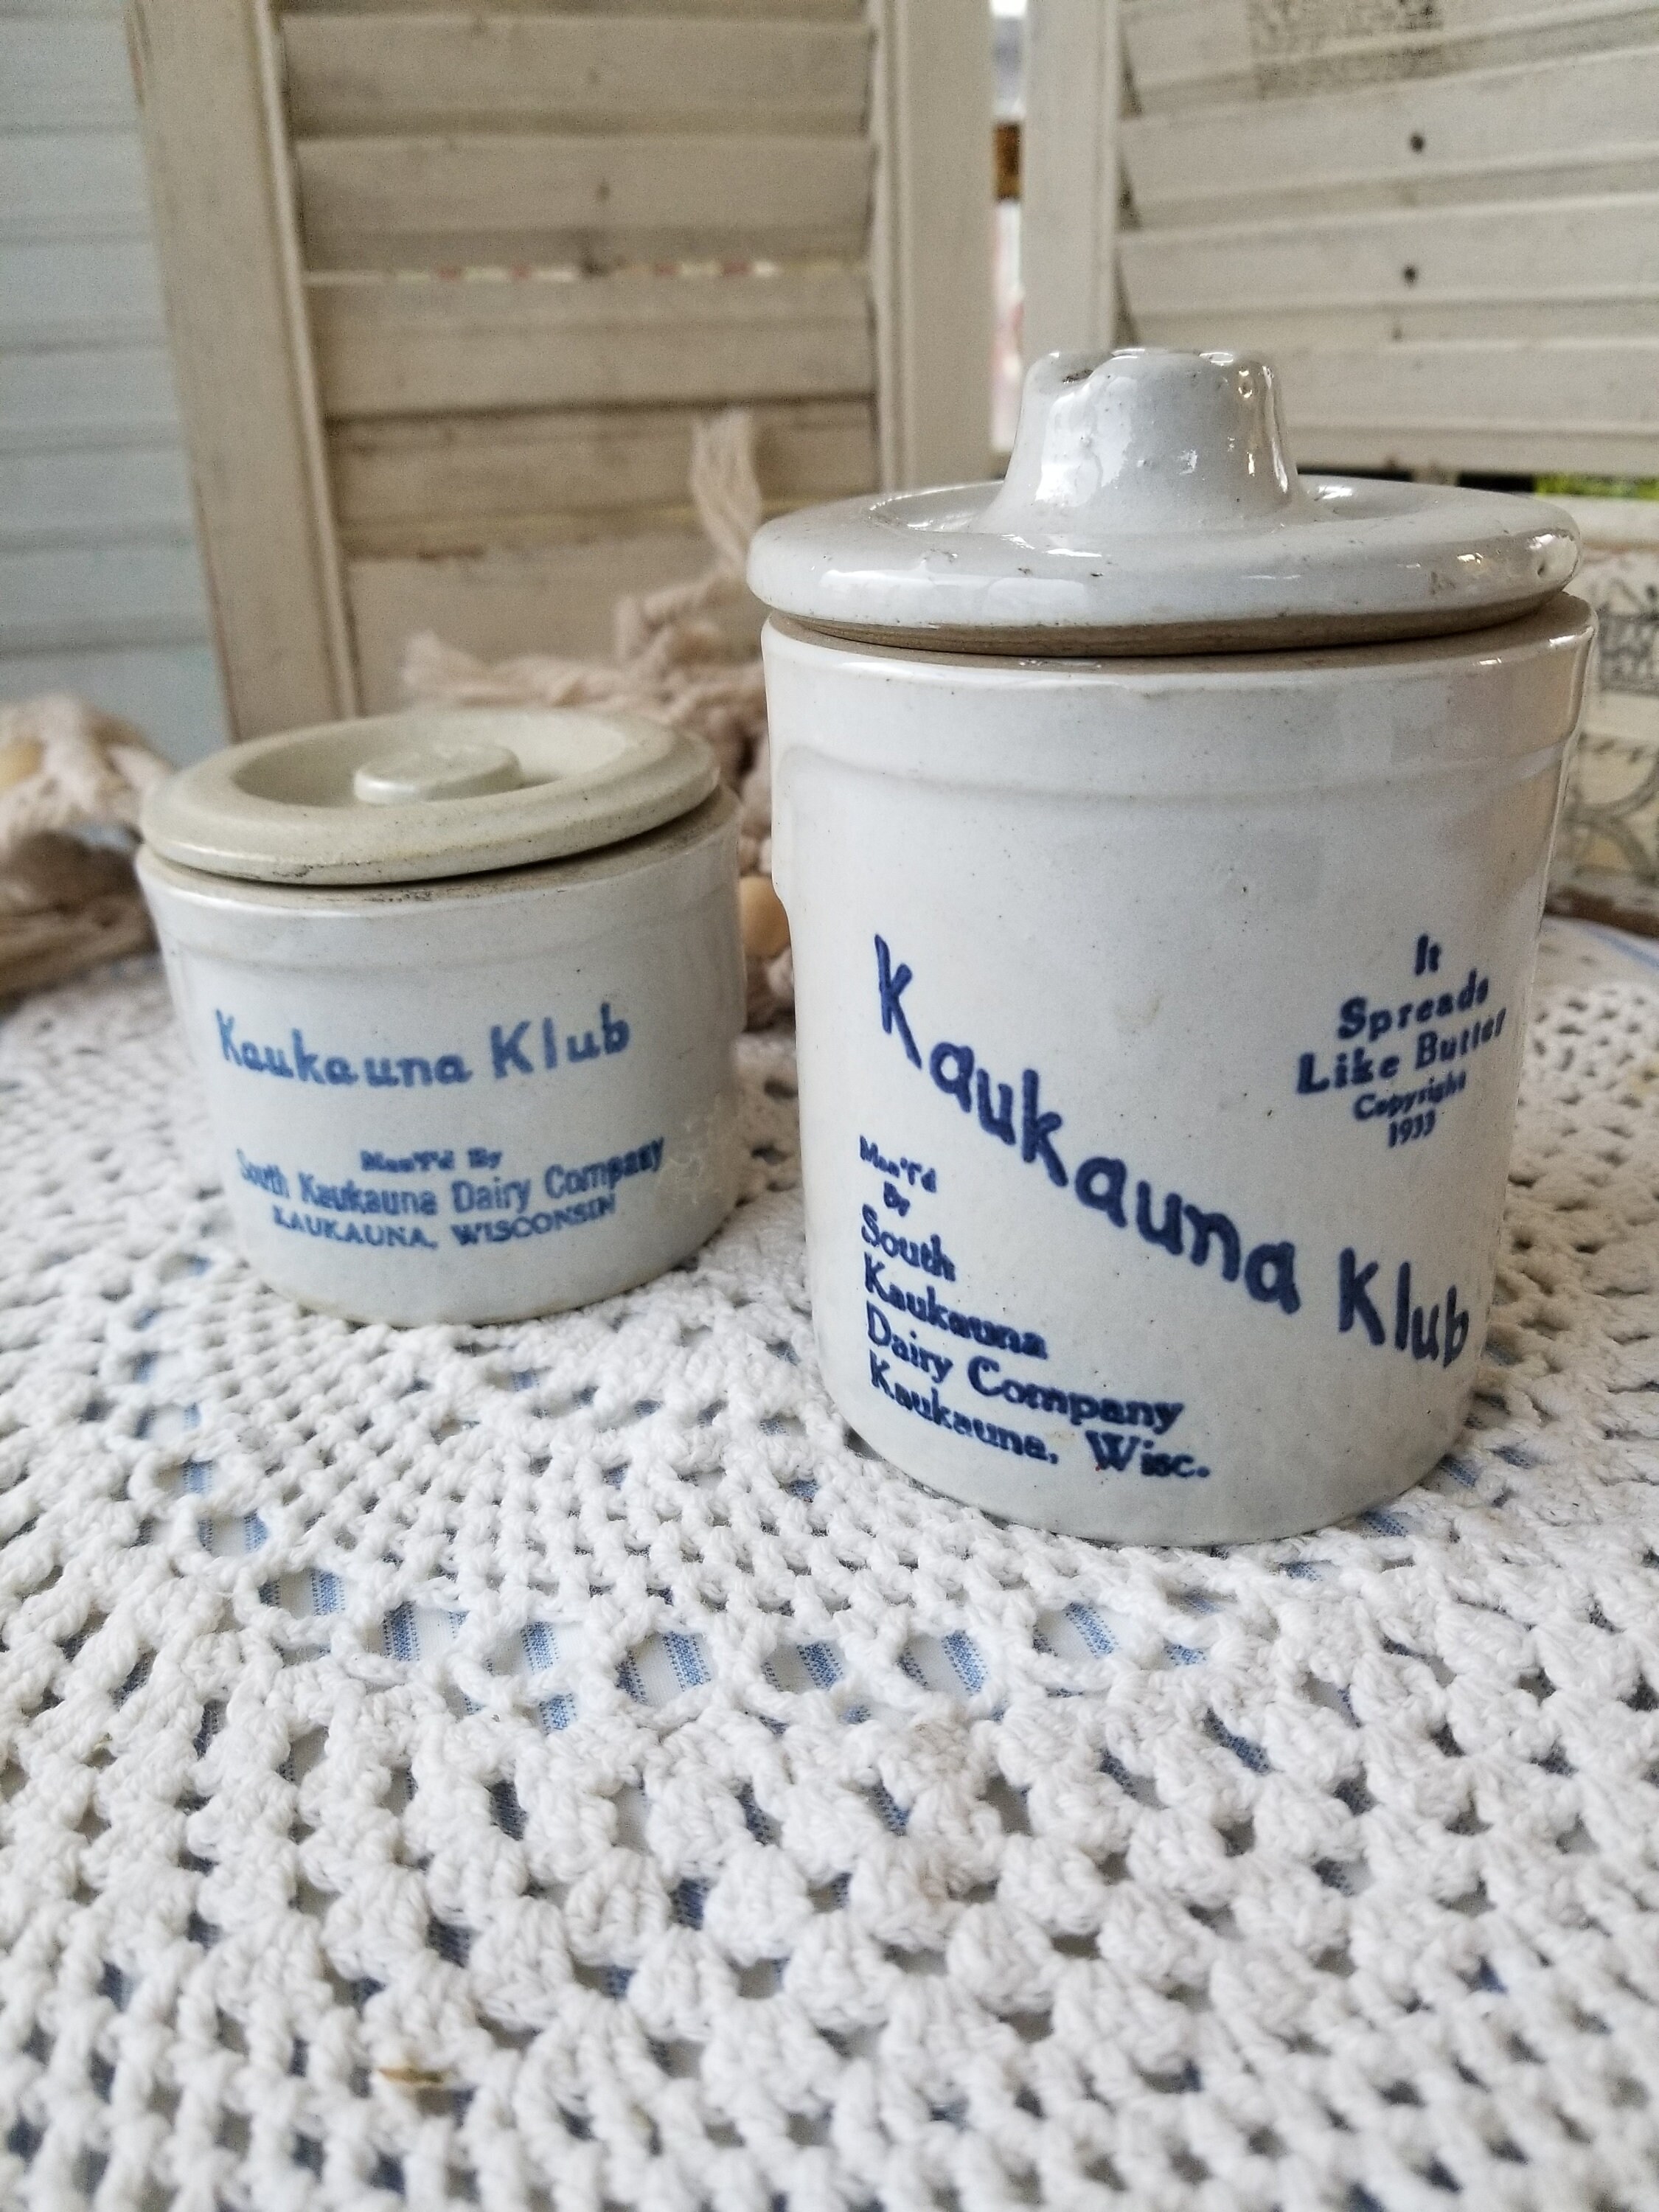 Kaukauna Klub Appetizer Crock / Small Farmhouse Stoneware Crock W/ Wire  Bale / Appetizer Sala Dessert Crock 